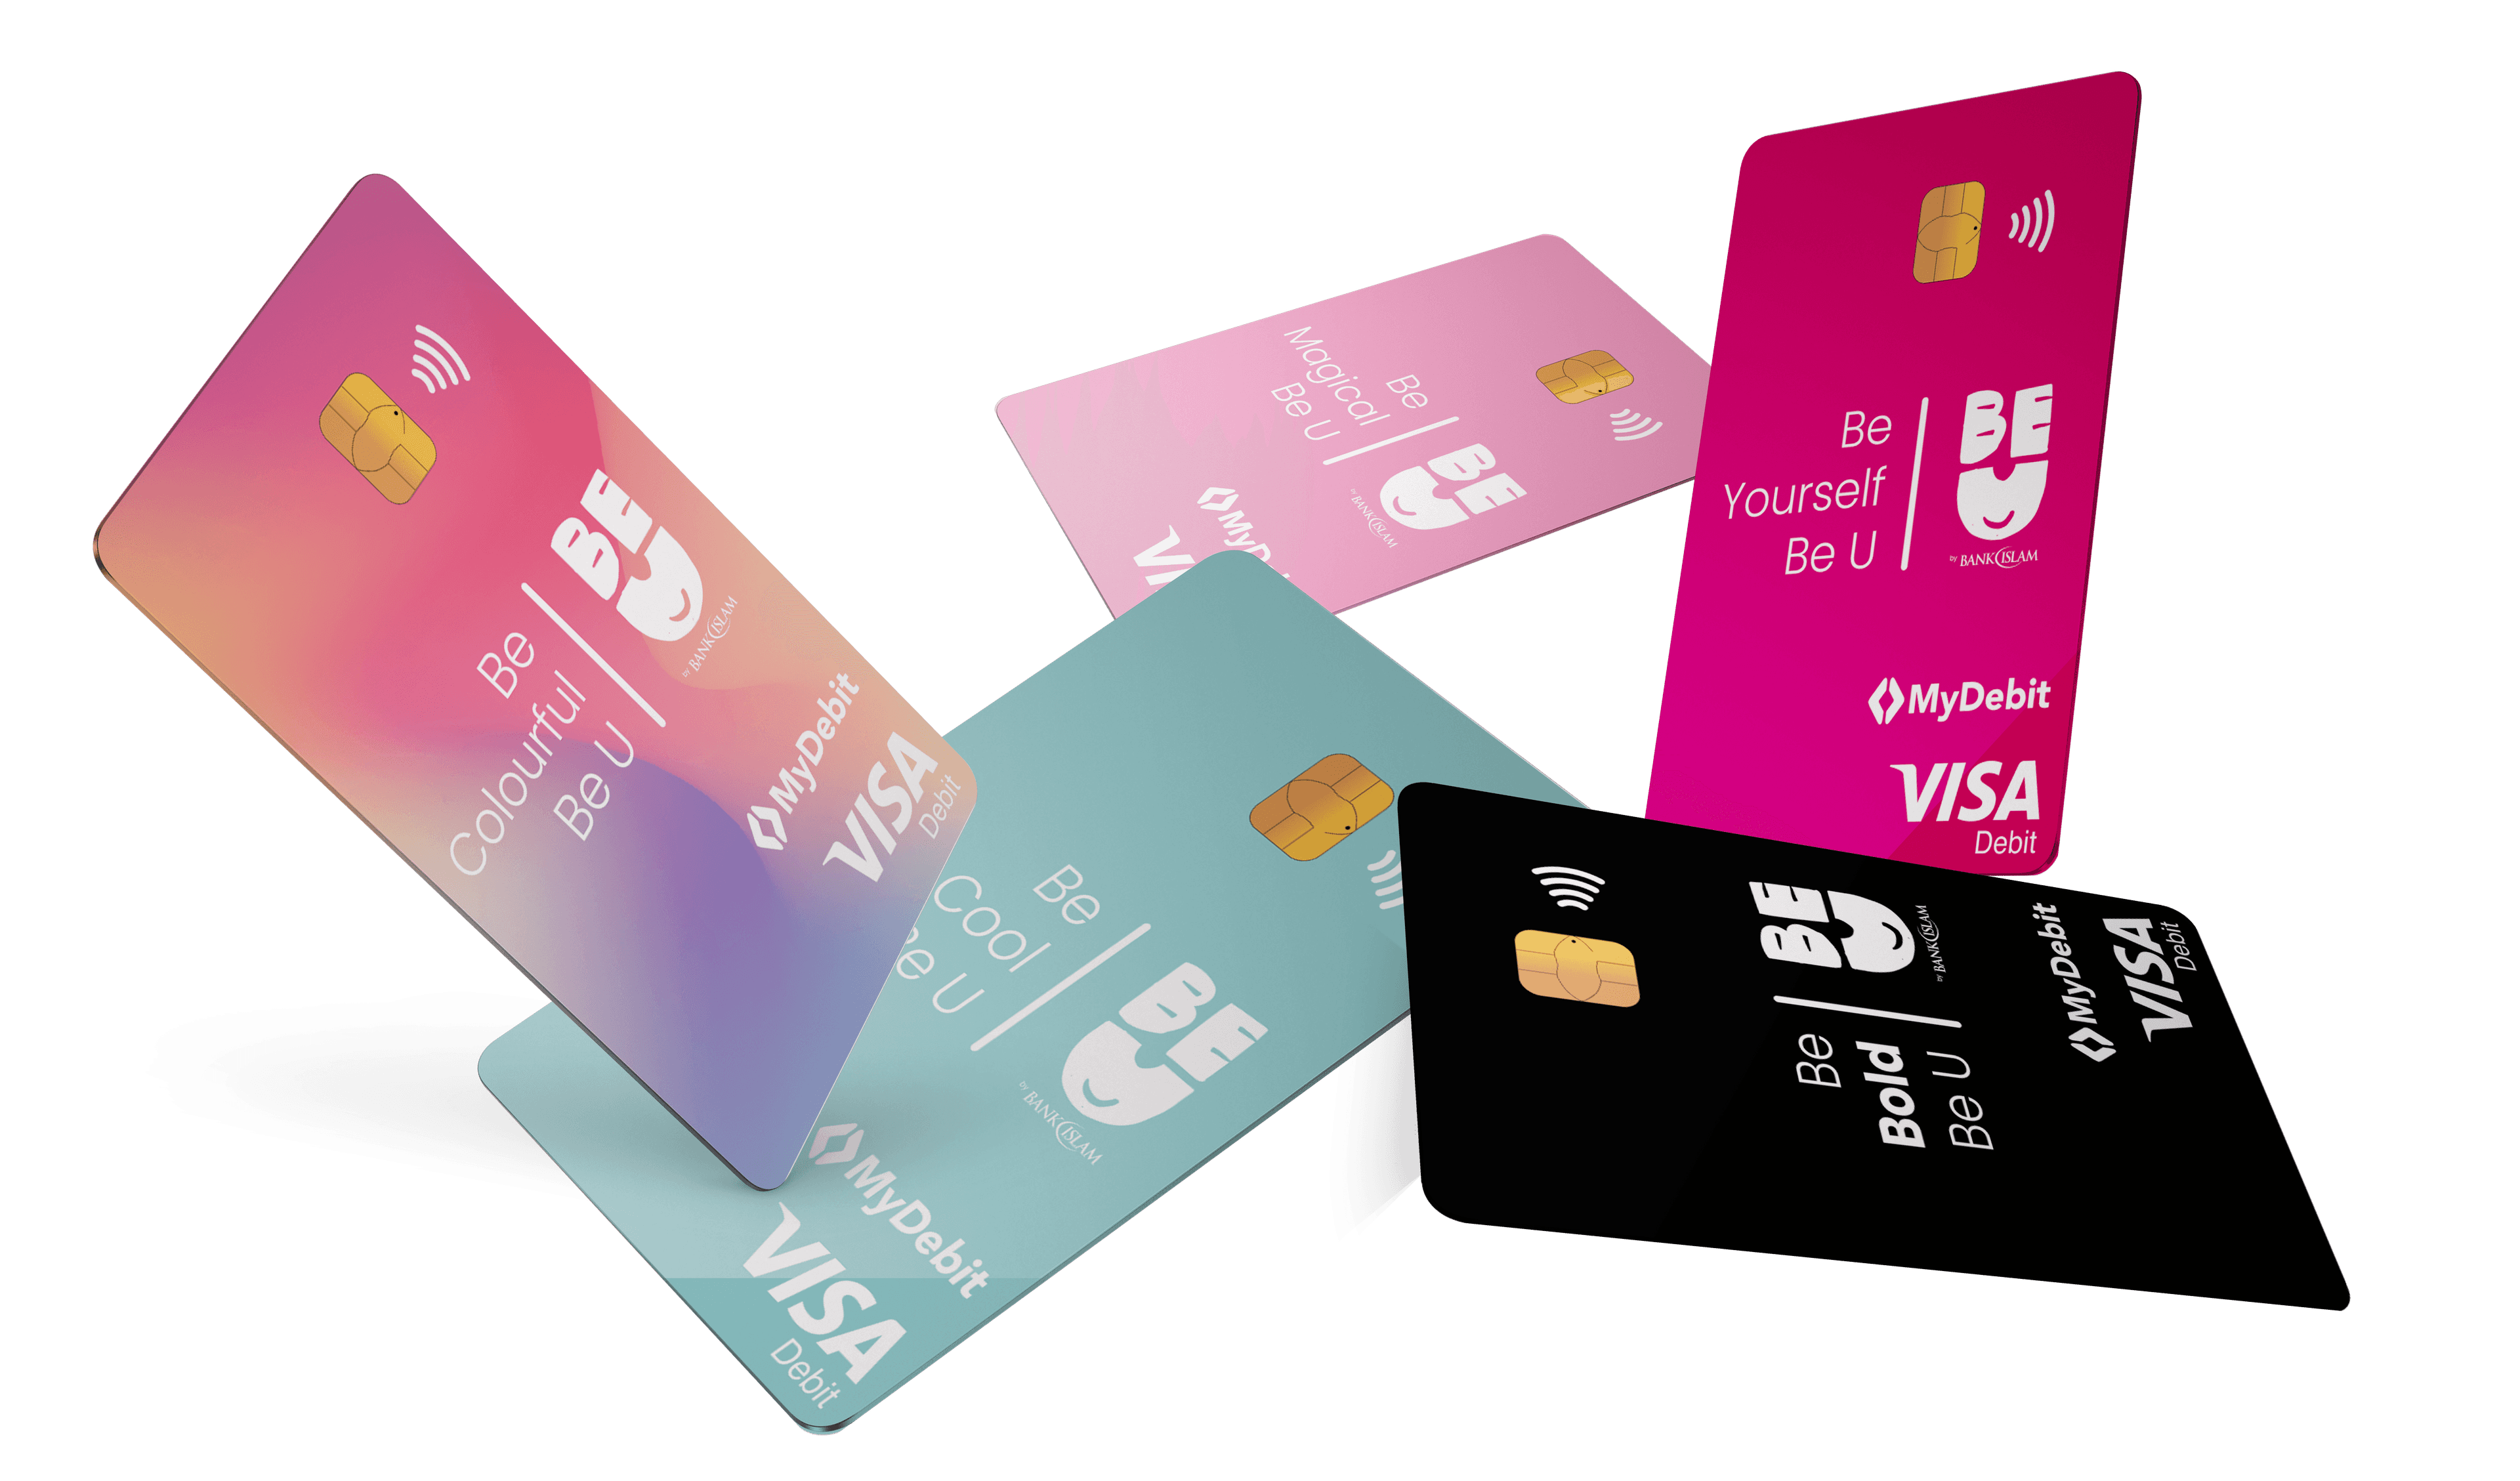 Be U Visa Debit Card-i: How to Apply